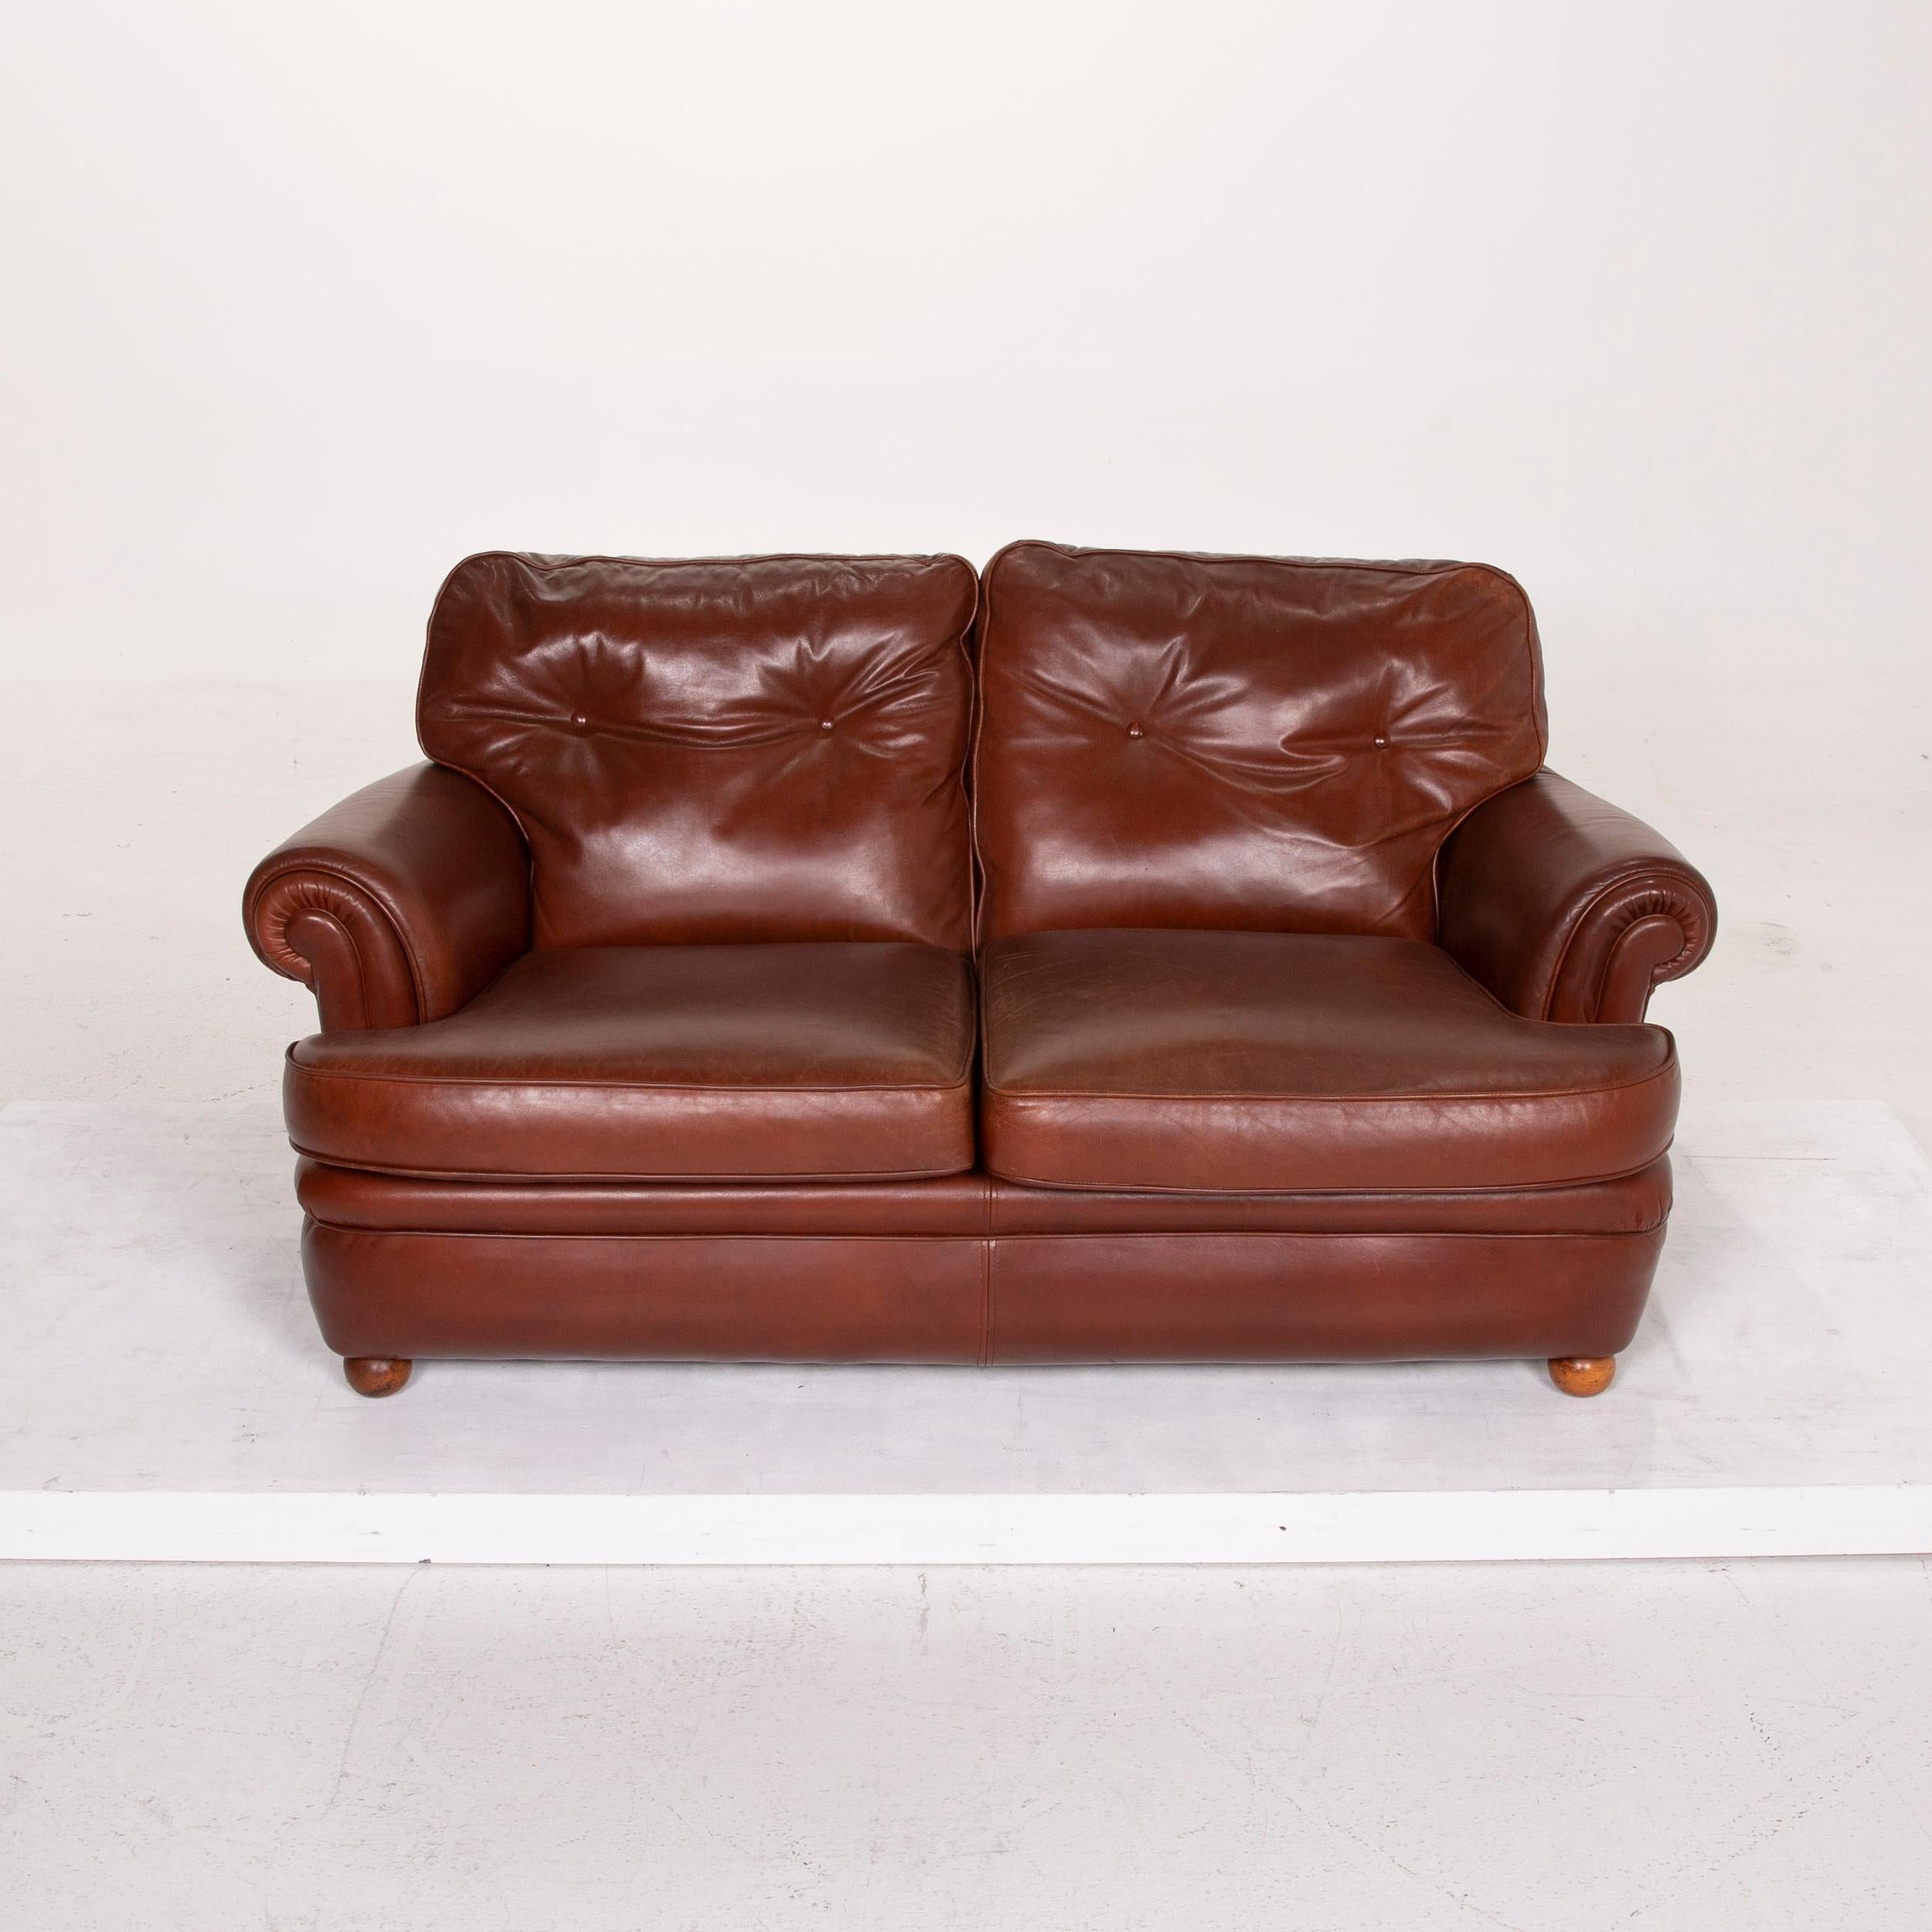 Poltrona Frau Leather Sofa Cognac Two-Seat 1